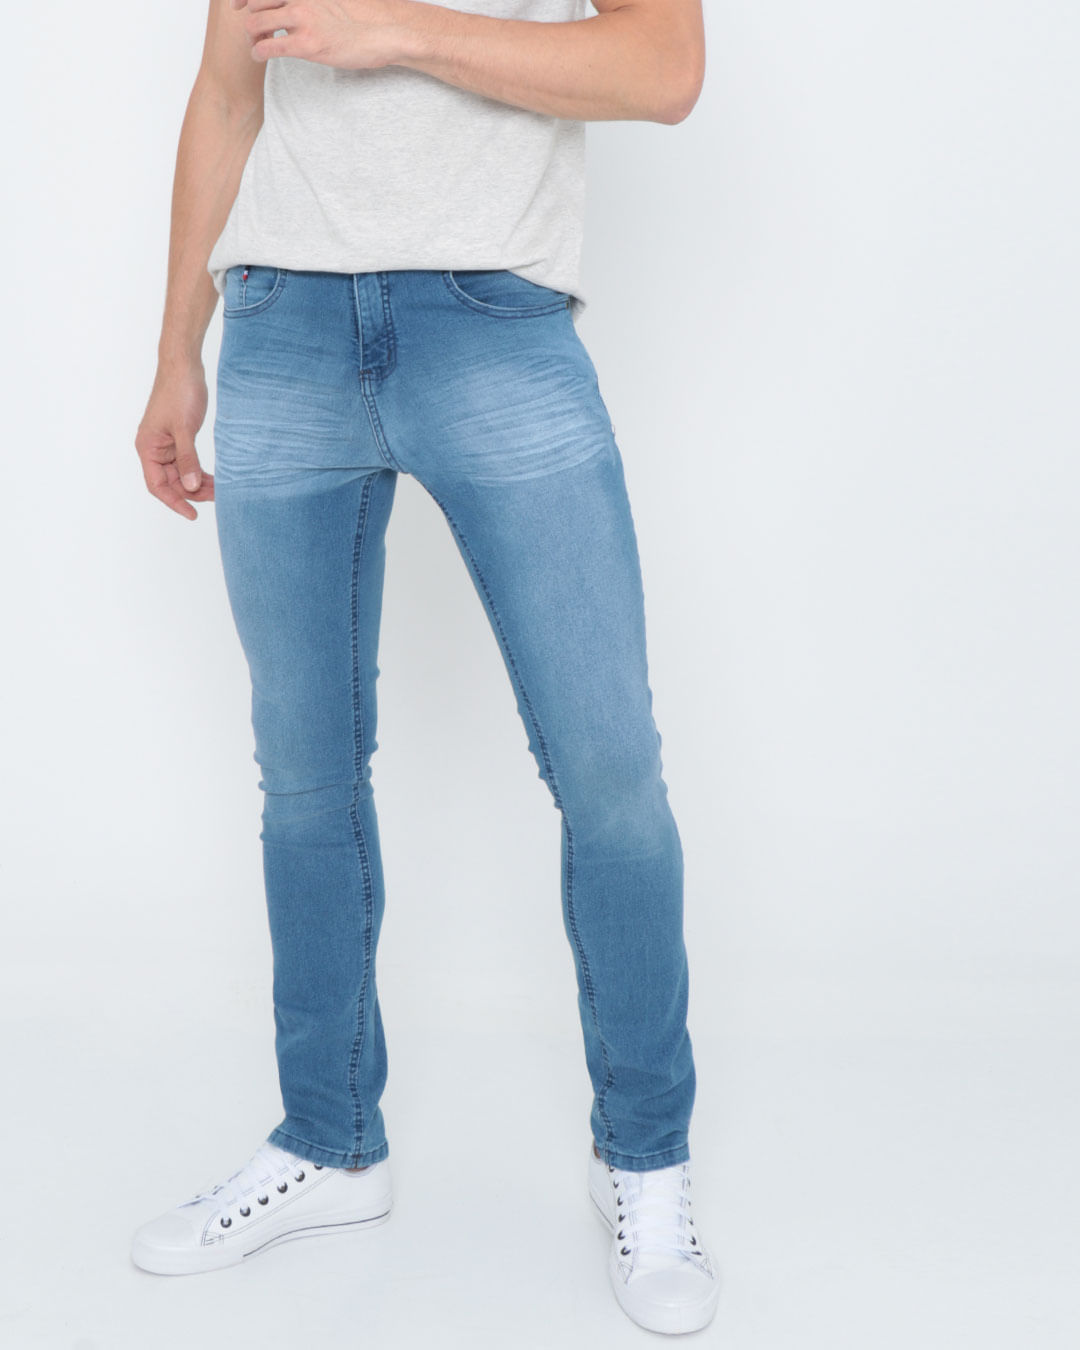 Calca-Masculina-Slim-Biotipo-Jeans-Azul